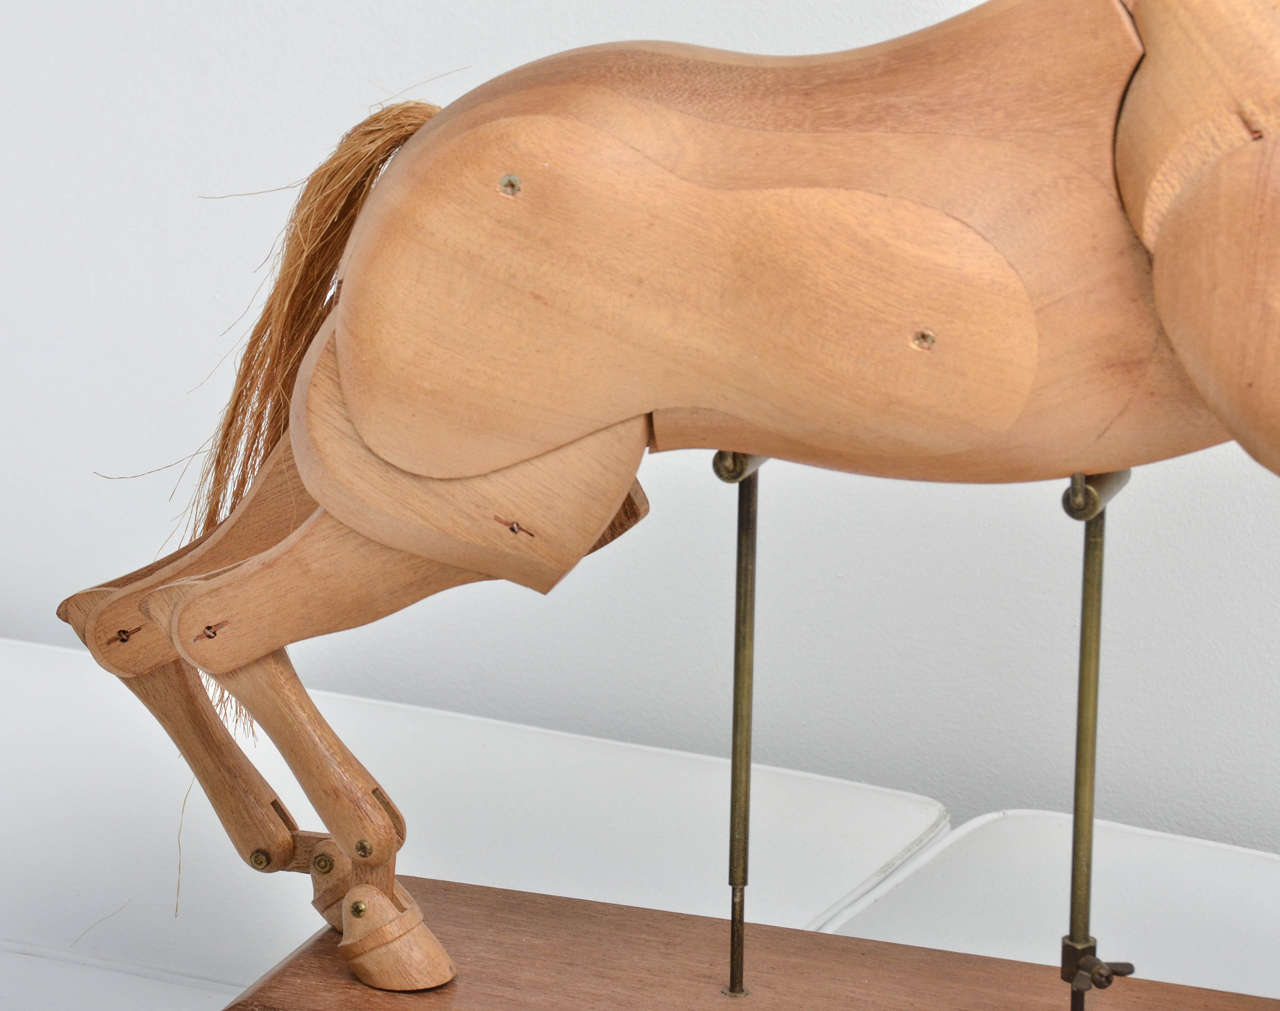 wooden horse model